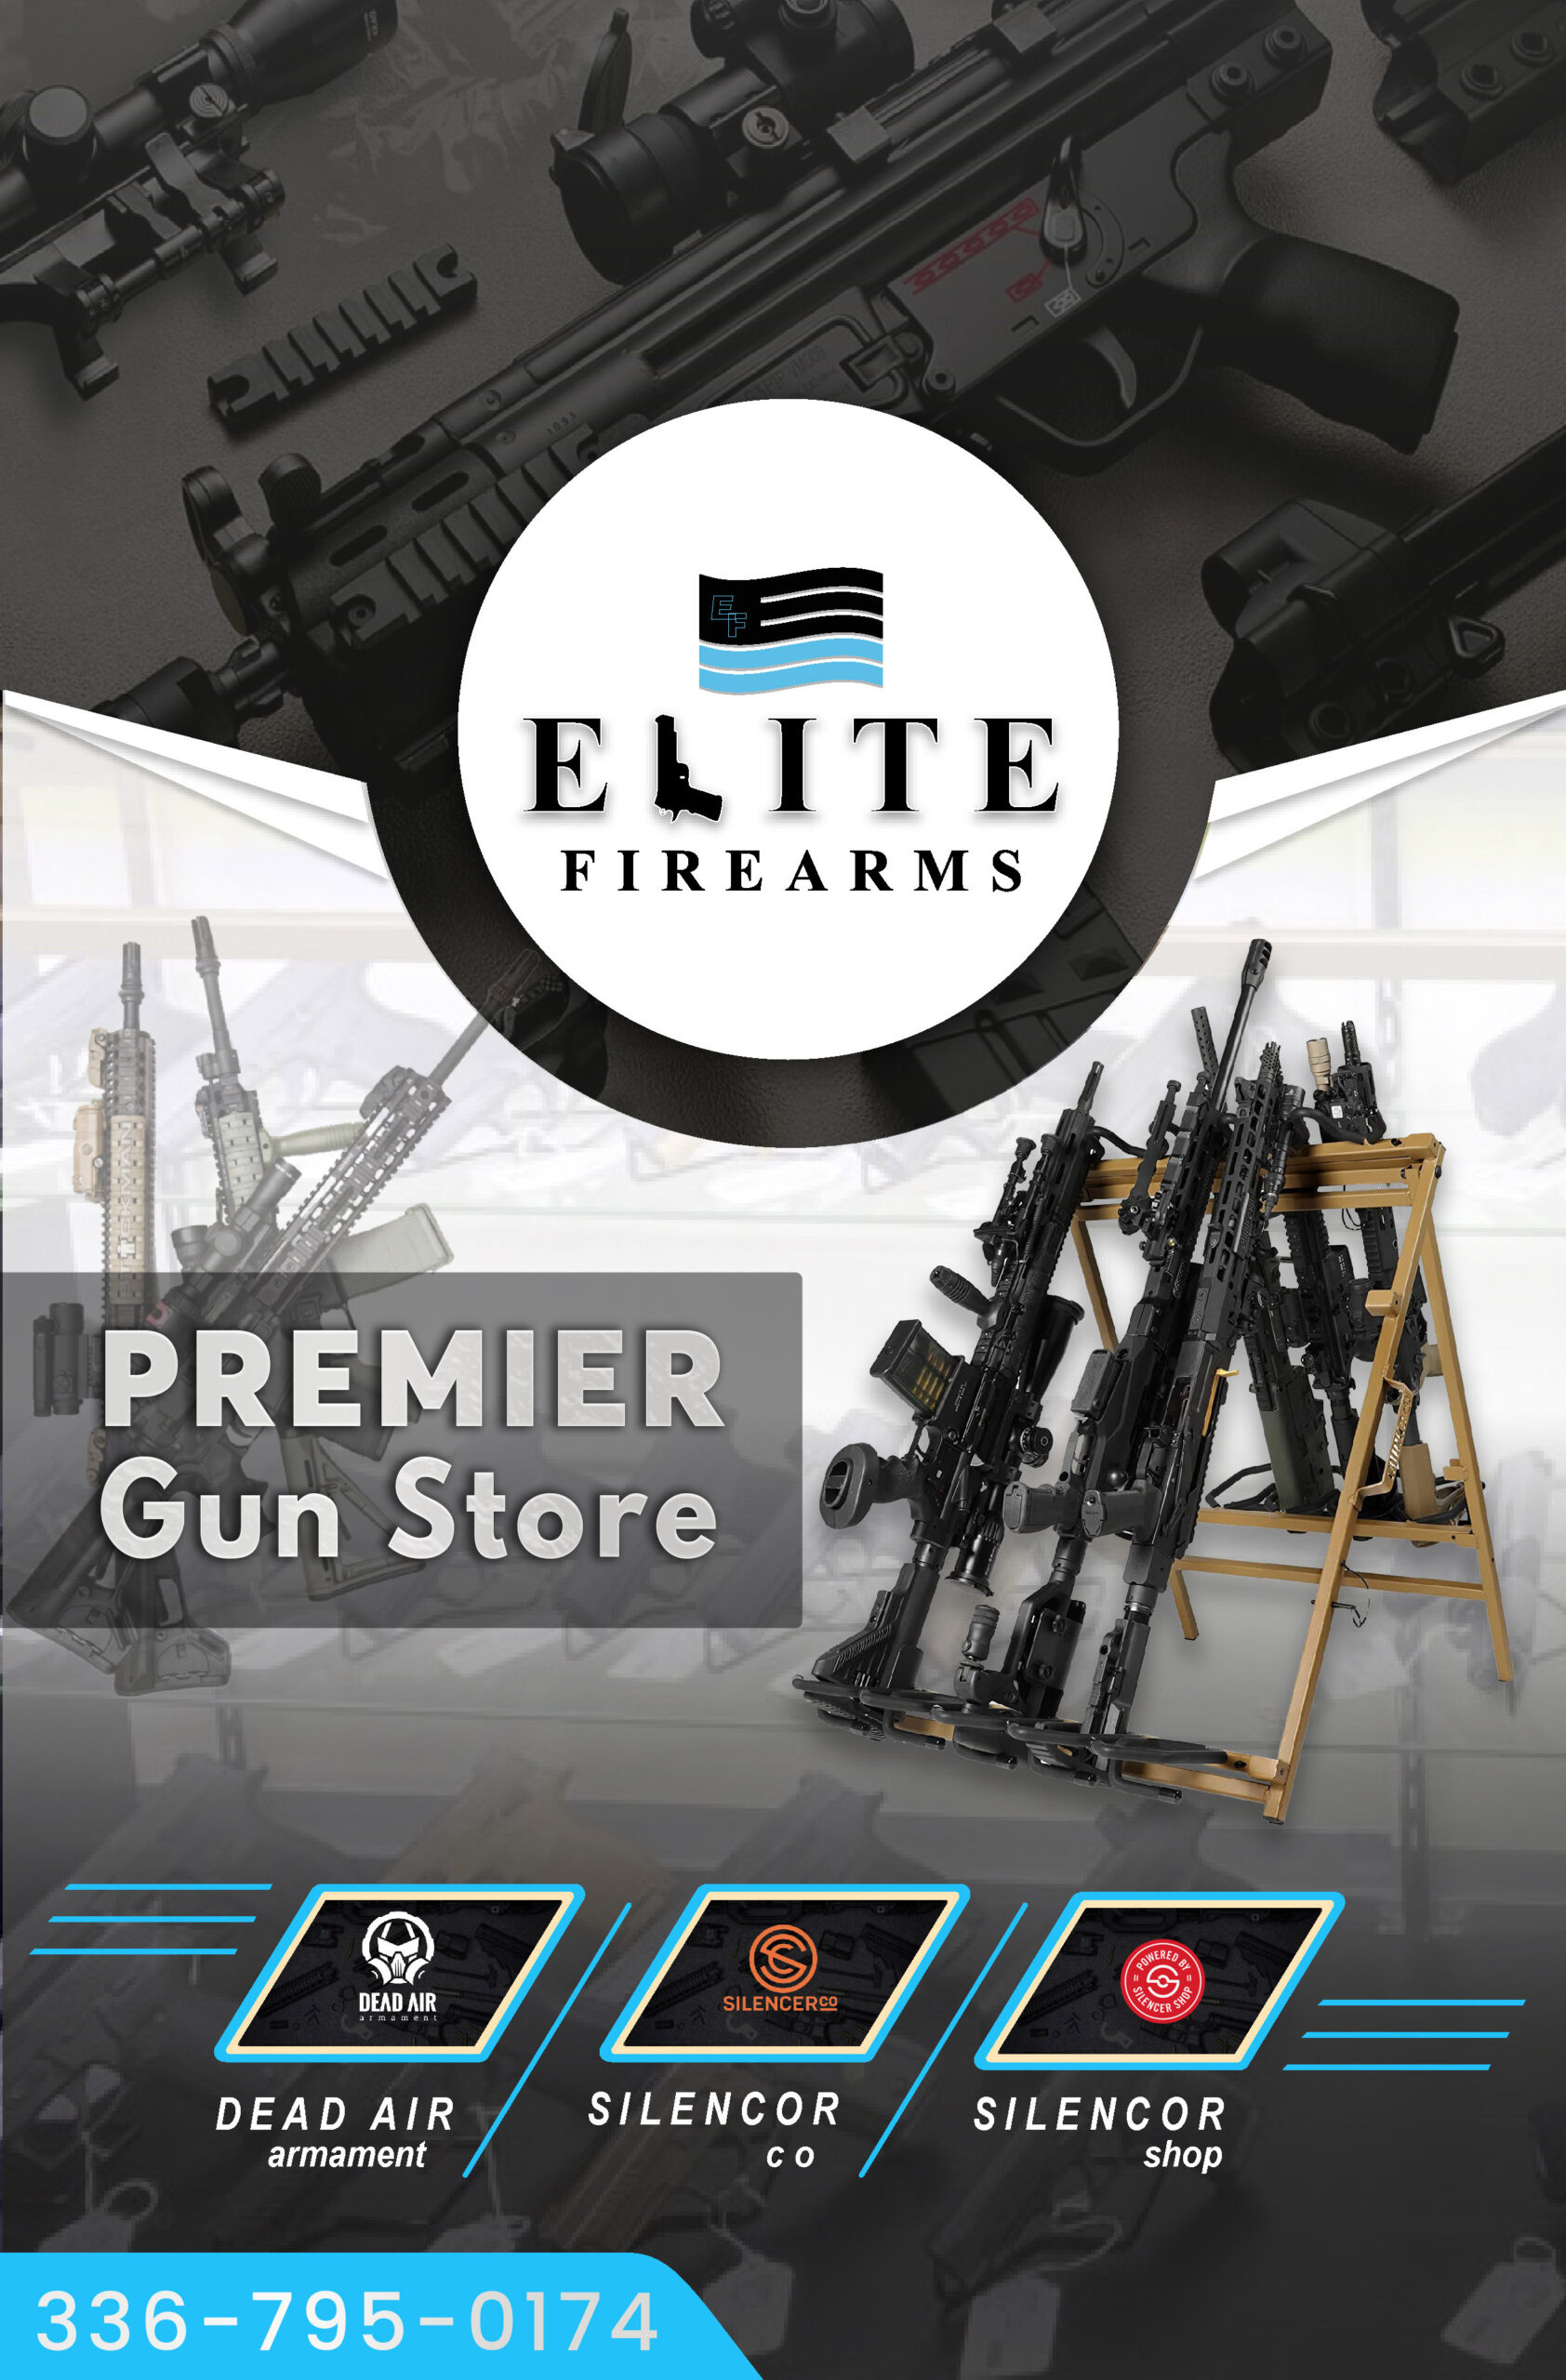 Elite Firearms North Carolina has the Best Firearms